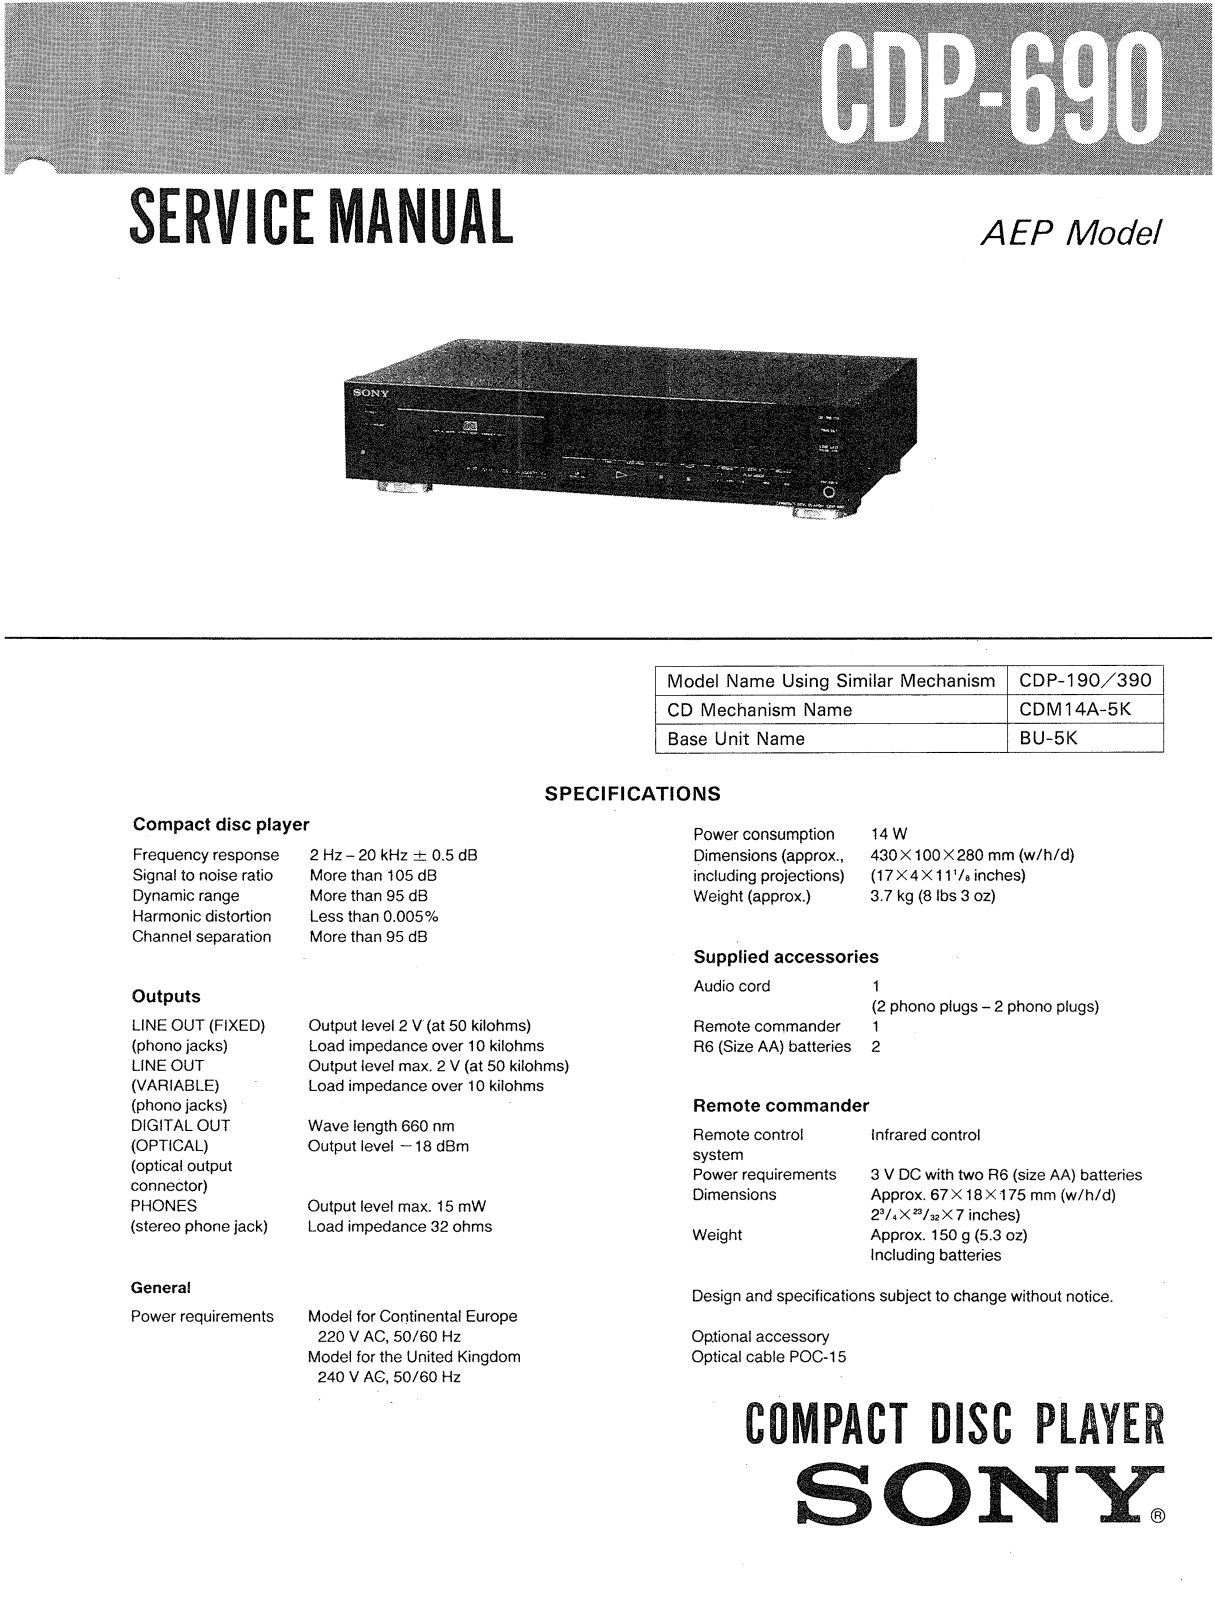 SONY CDP-690-AEP Service Manual